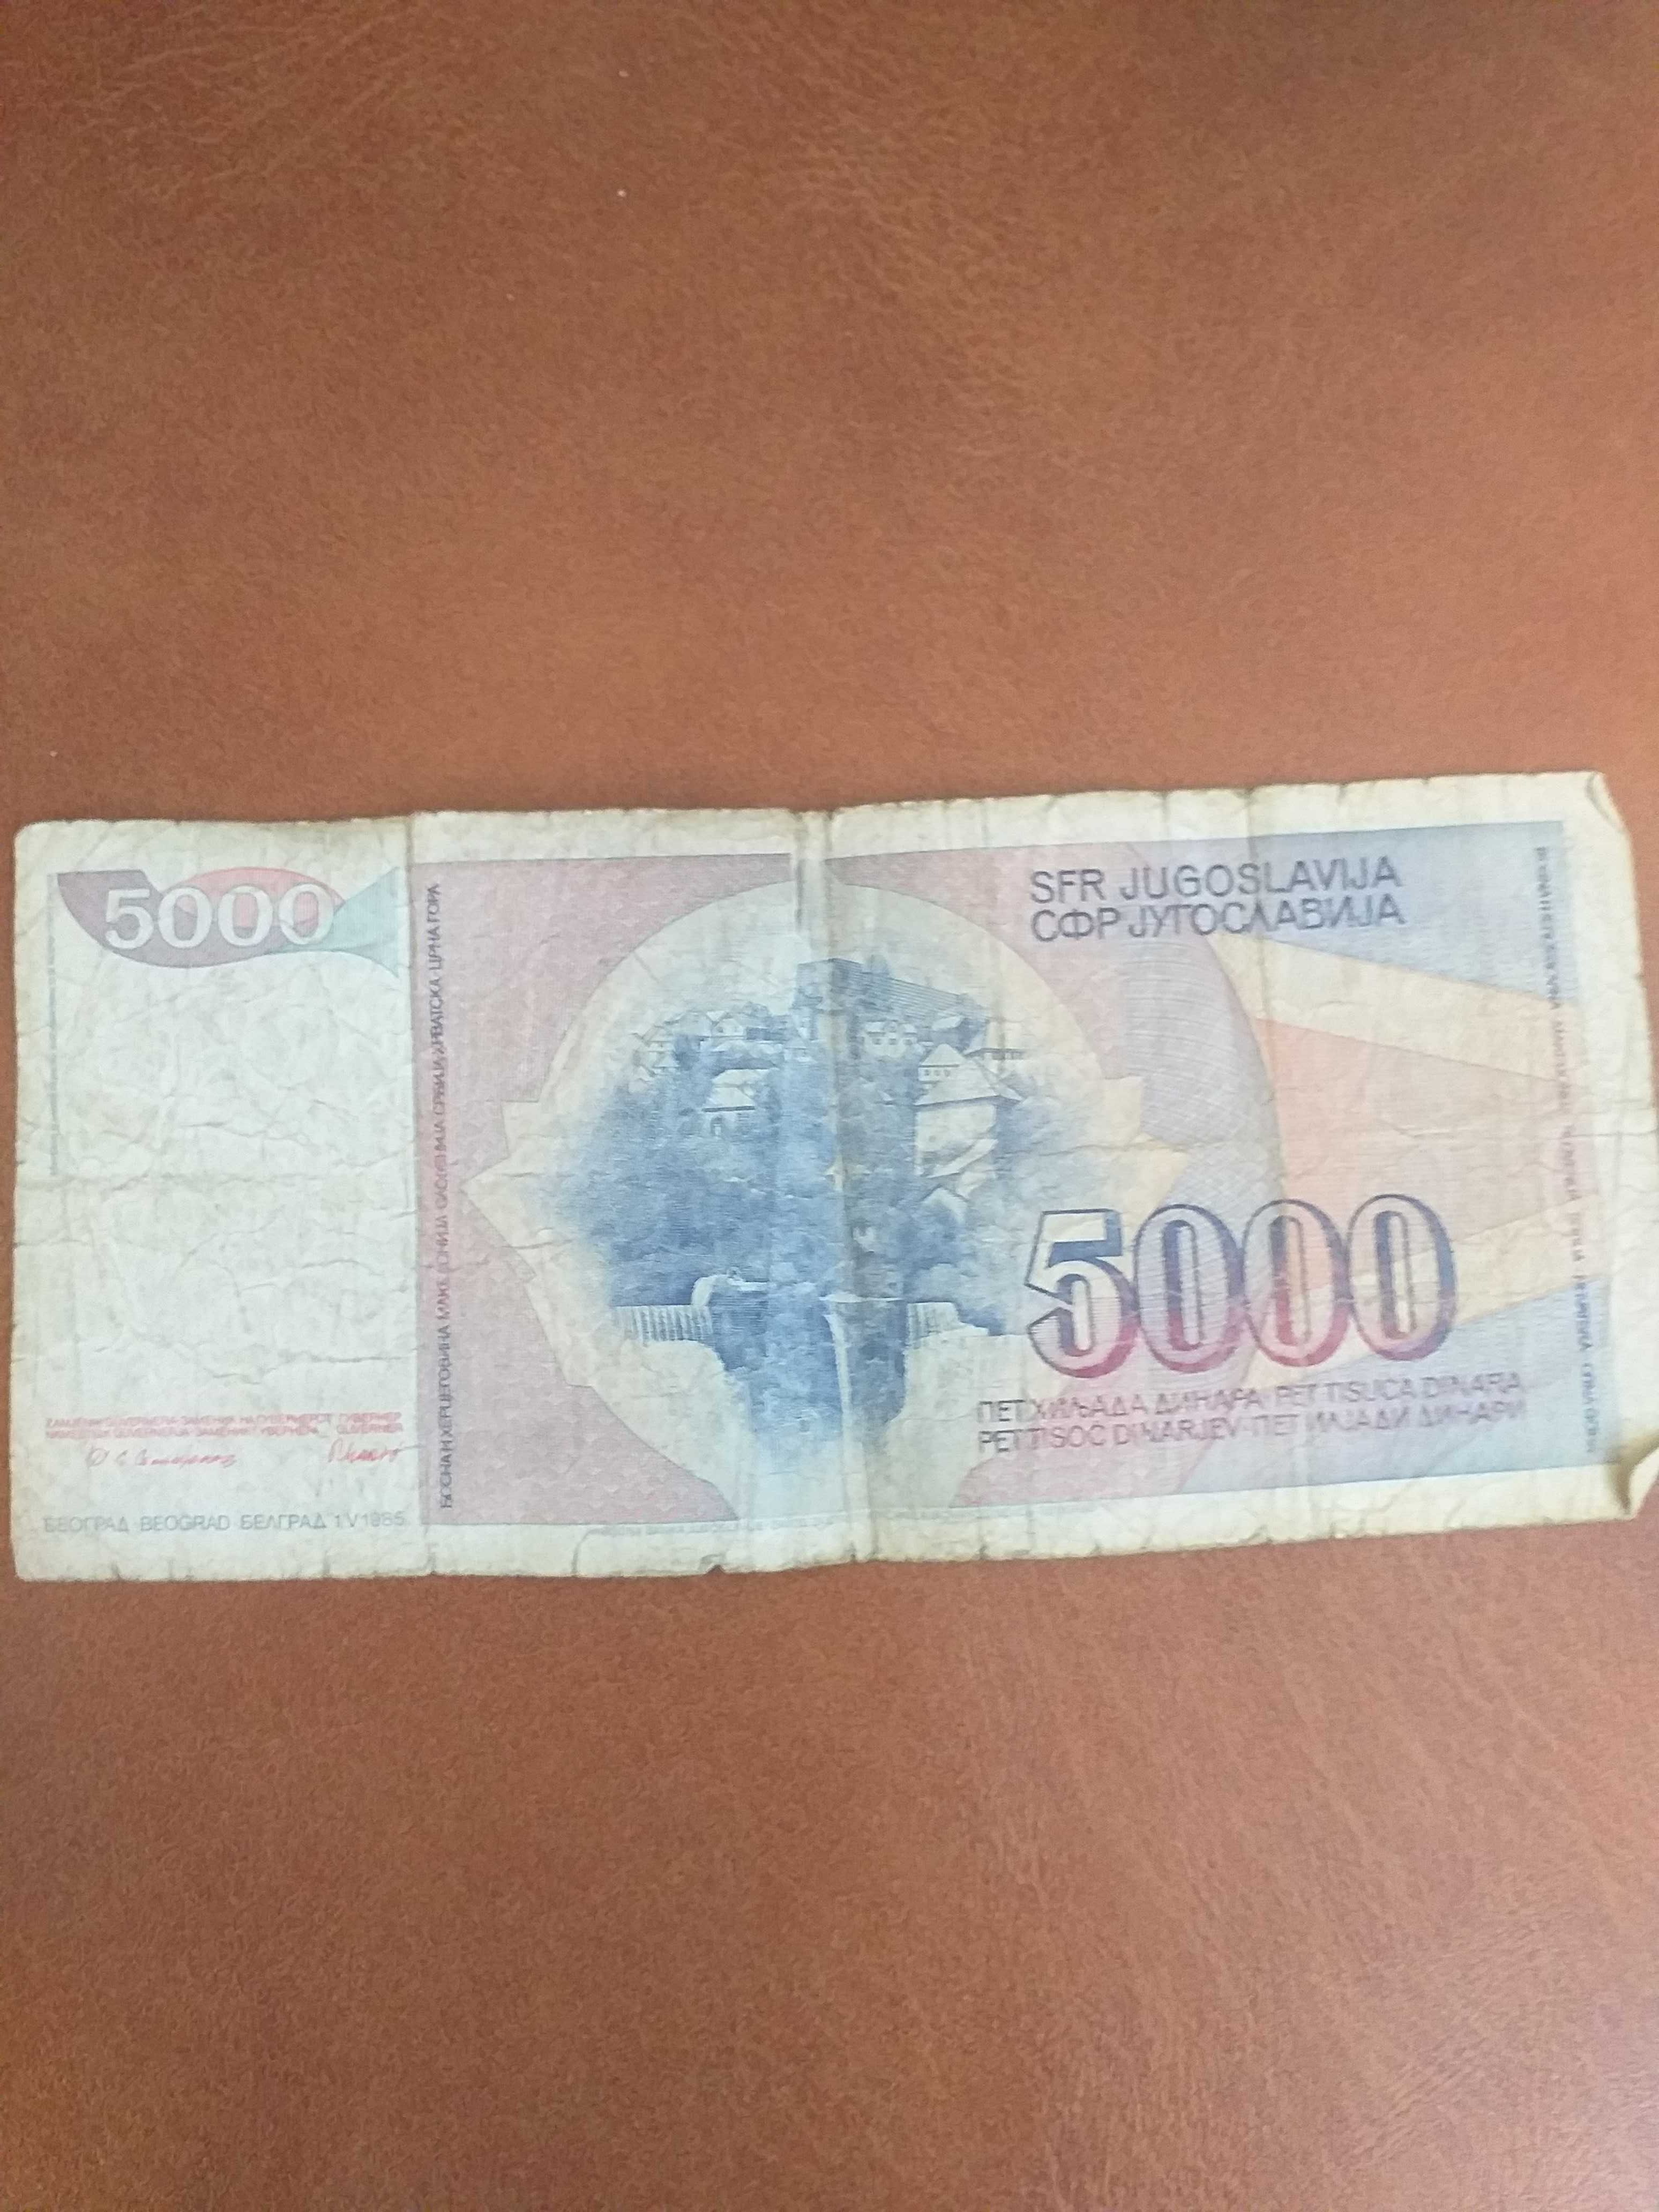 Bancnote vechi Iugoslavia